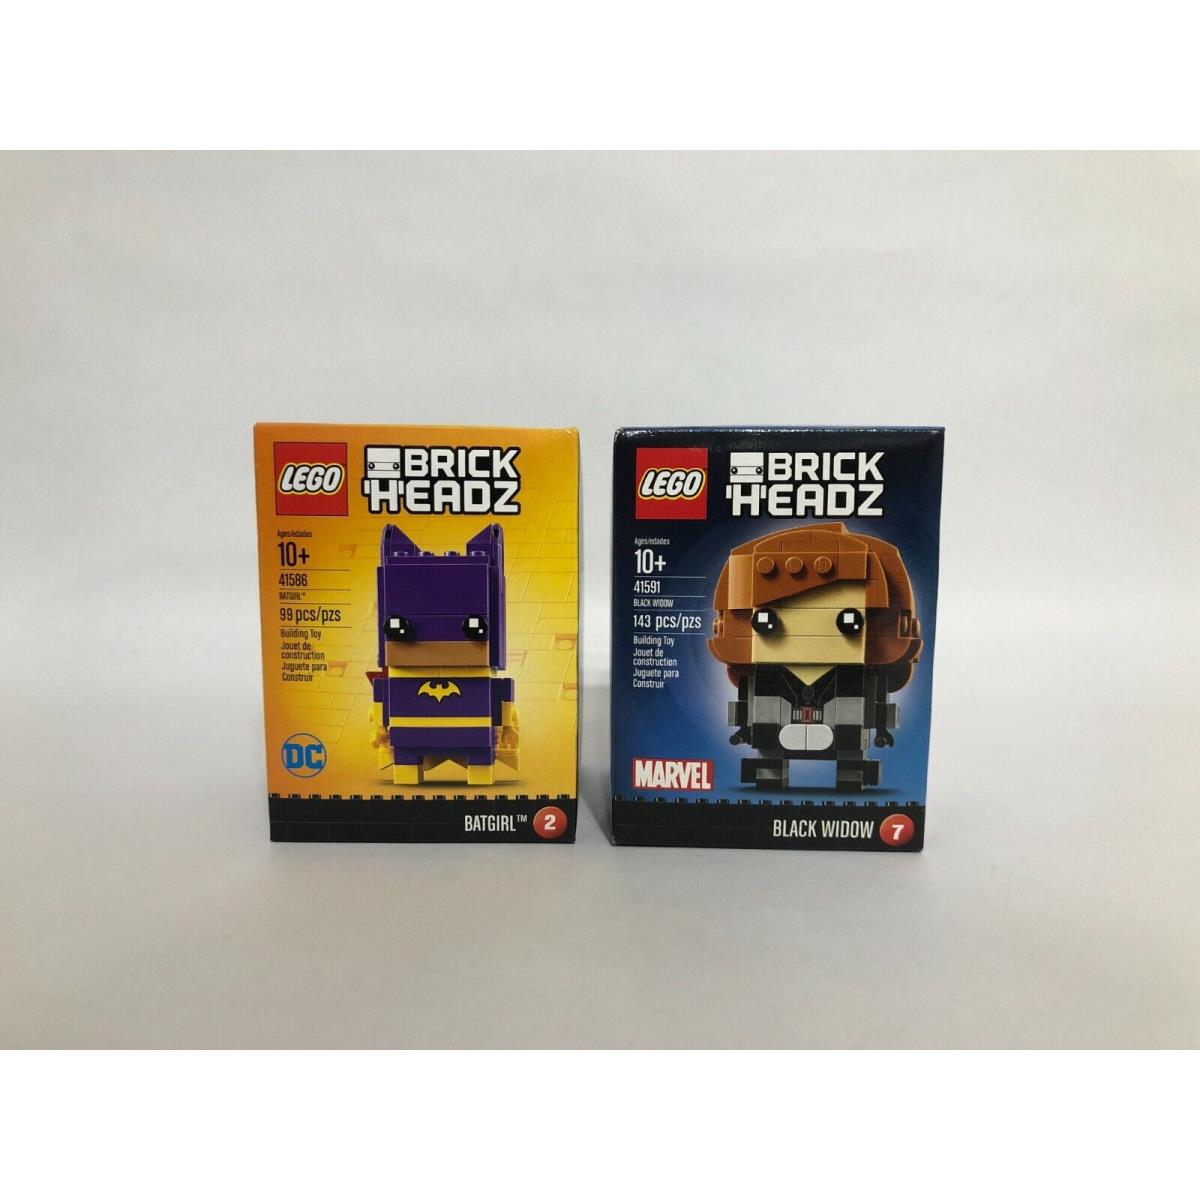 Lego Brickheadz 41586 Batgirl and 41591 Black Widow - - - Retired